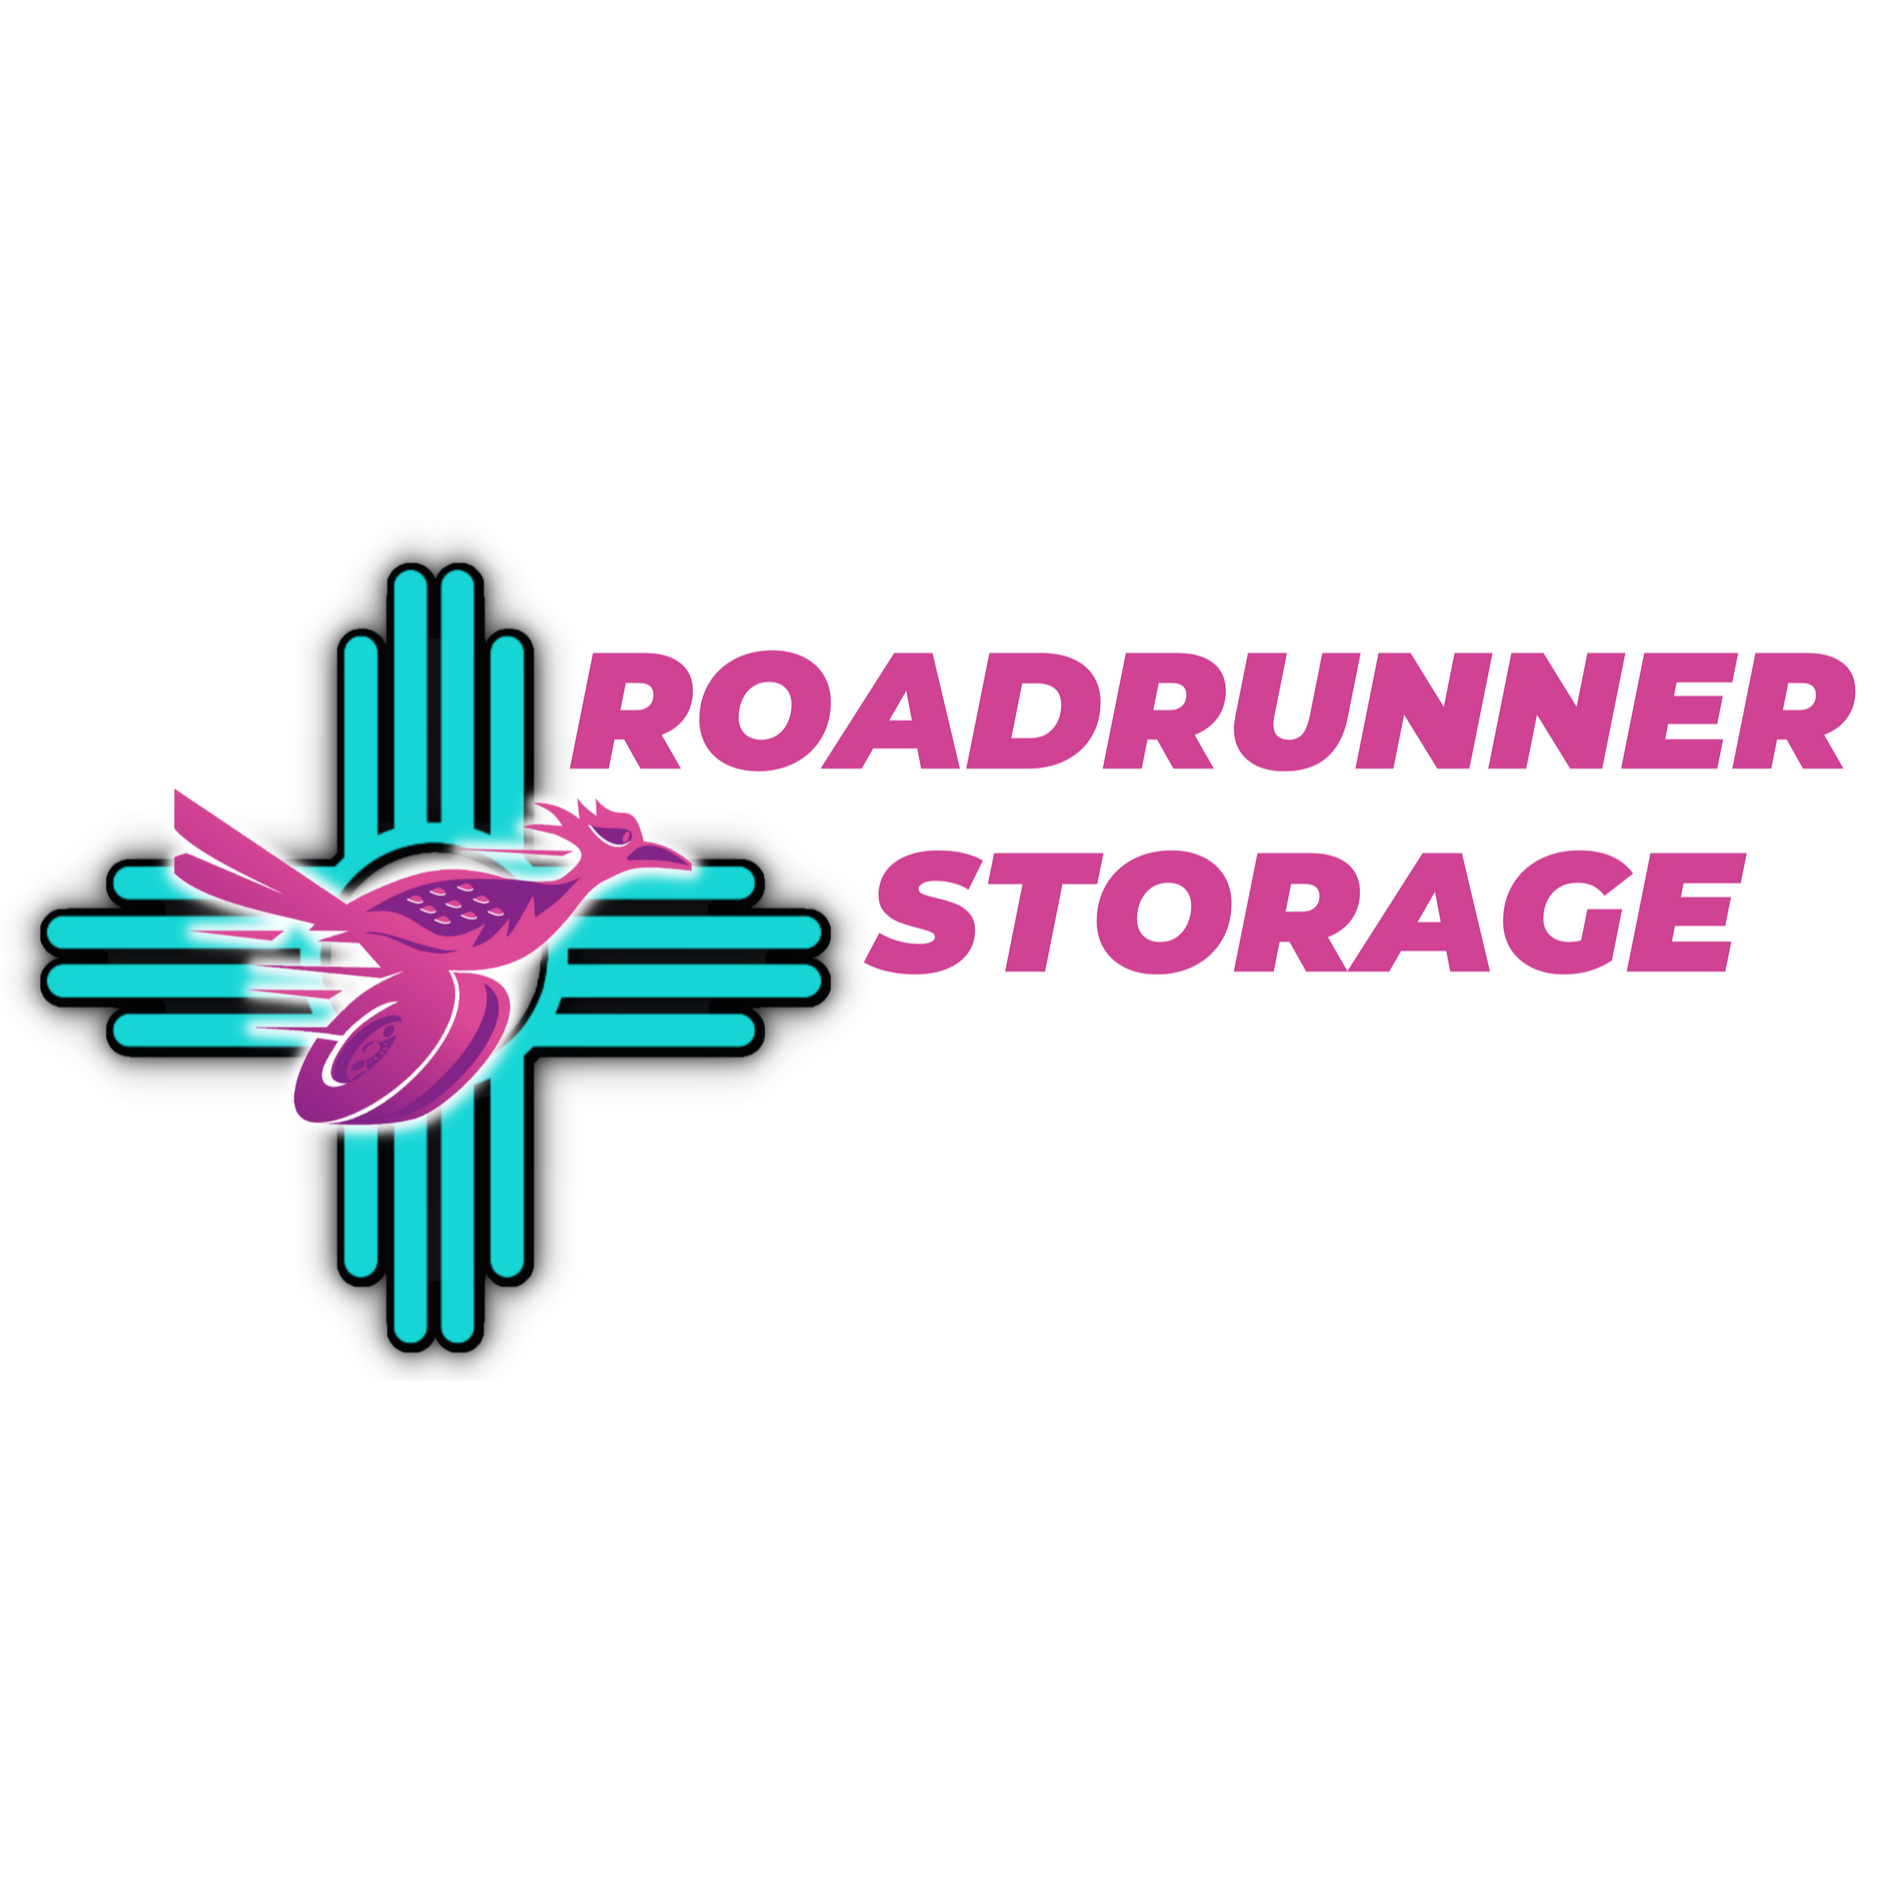 Roadrunner Storage - Rio Rancho, NM 87124 - (505)900-4963 | ShowMeLocal.com